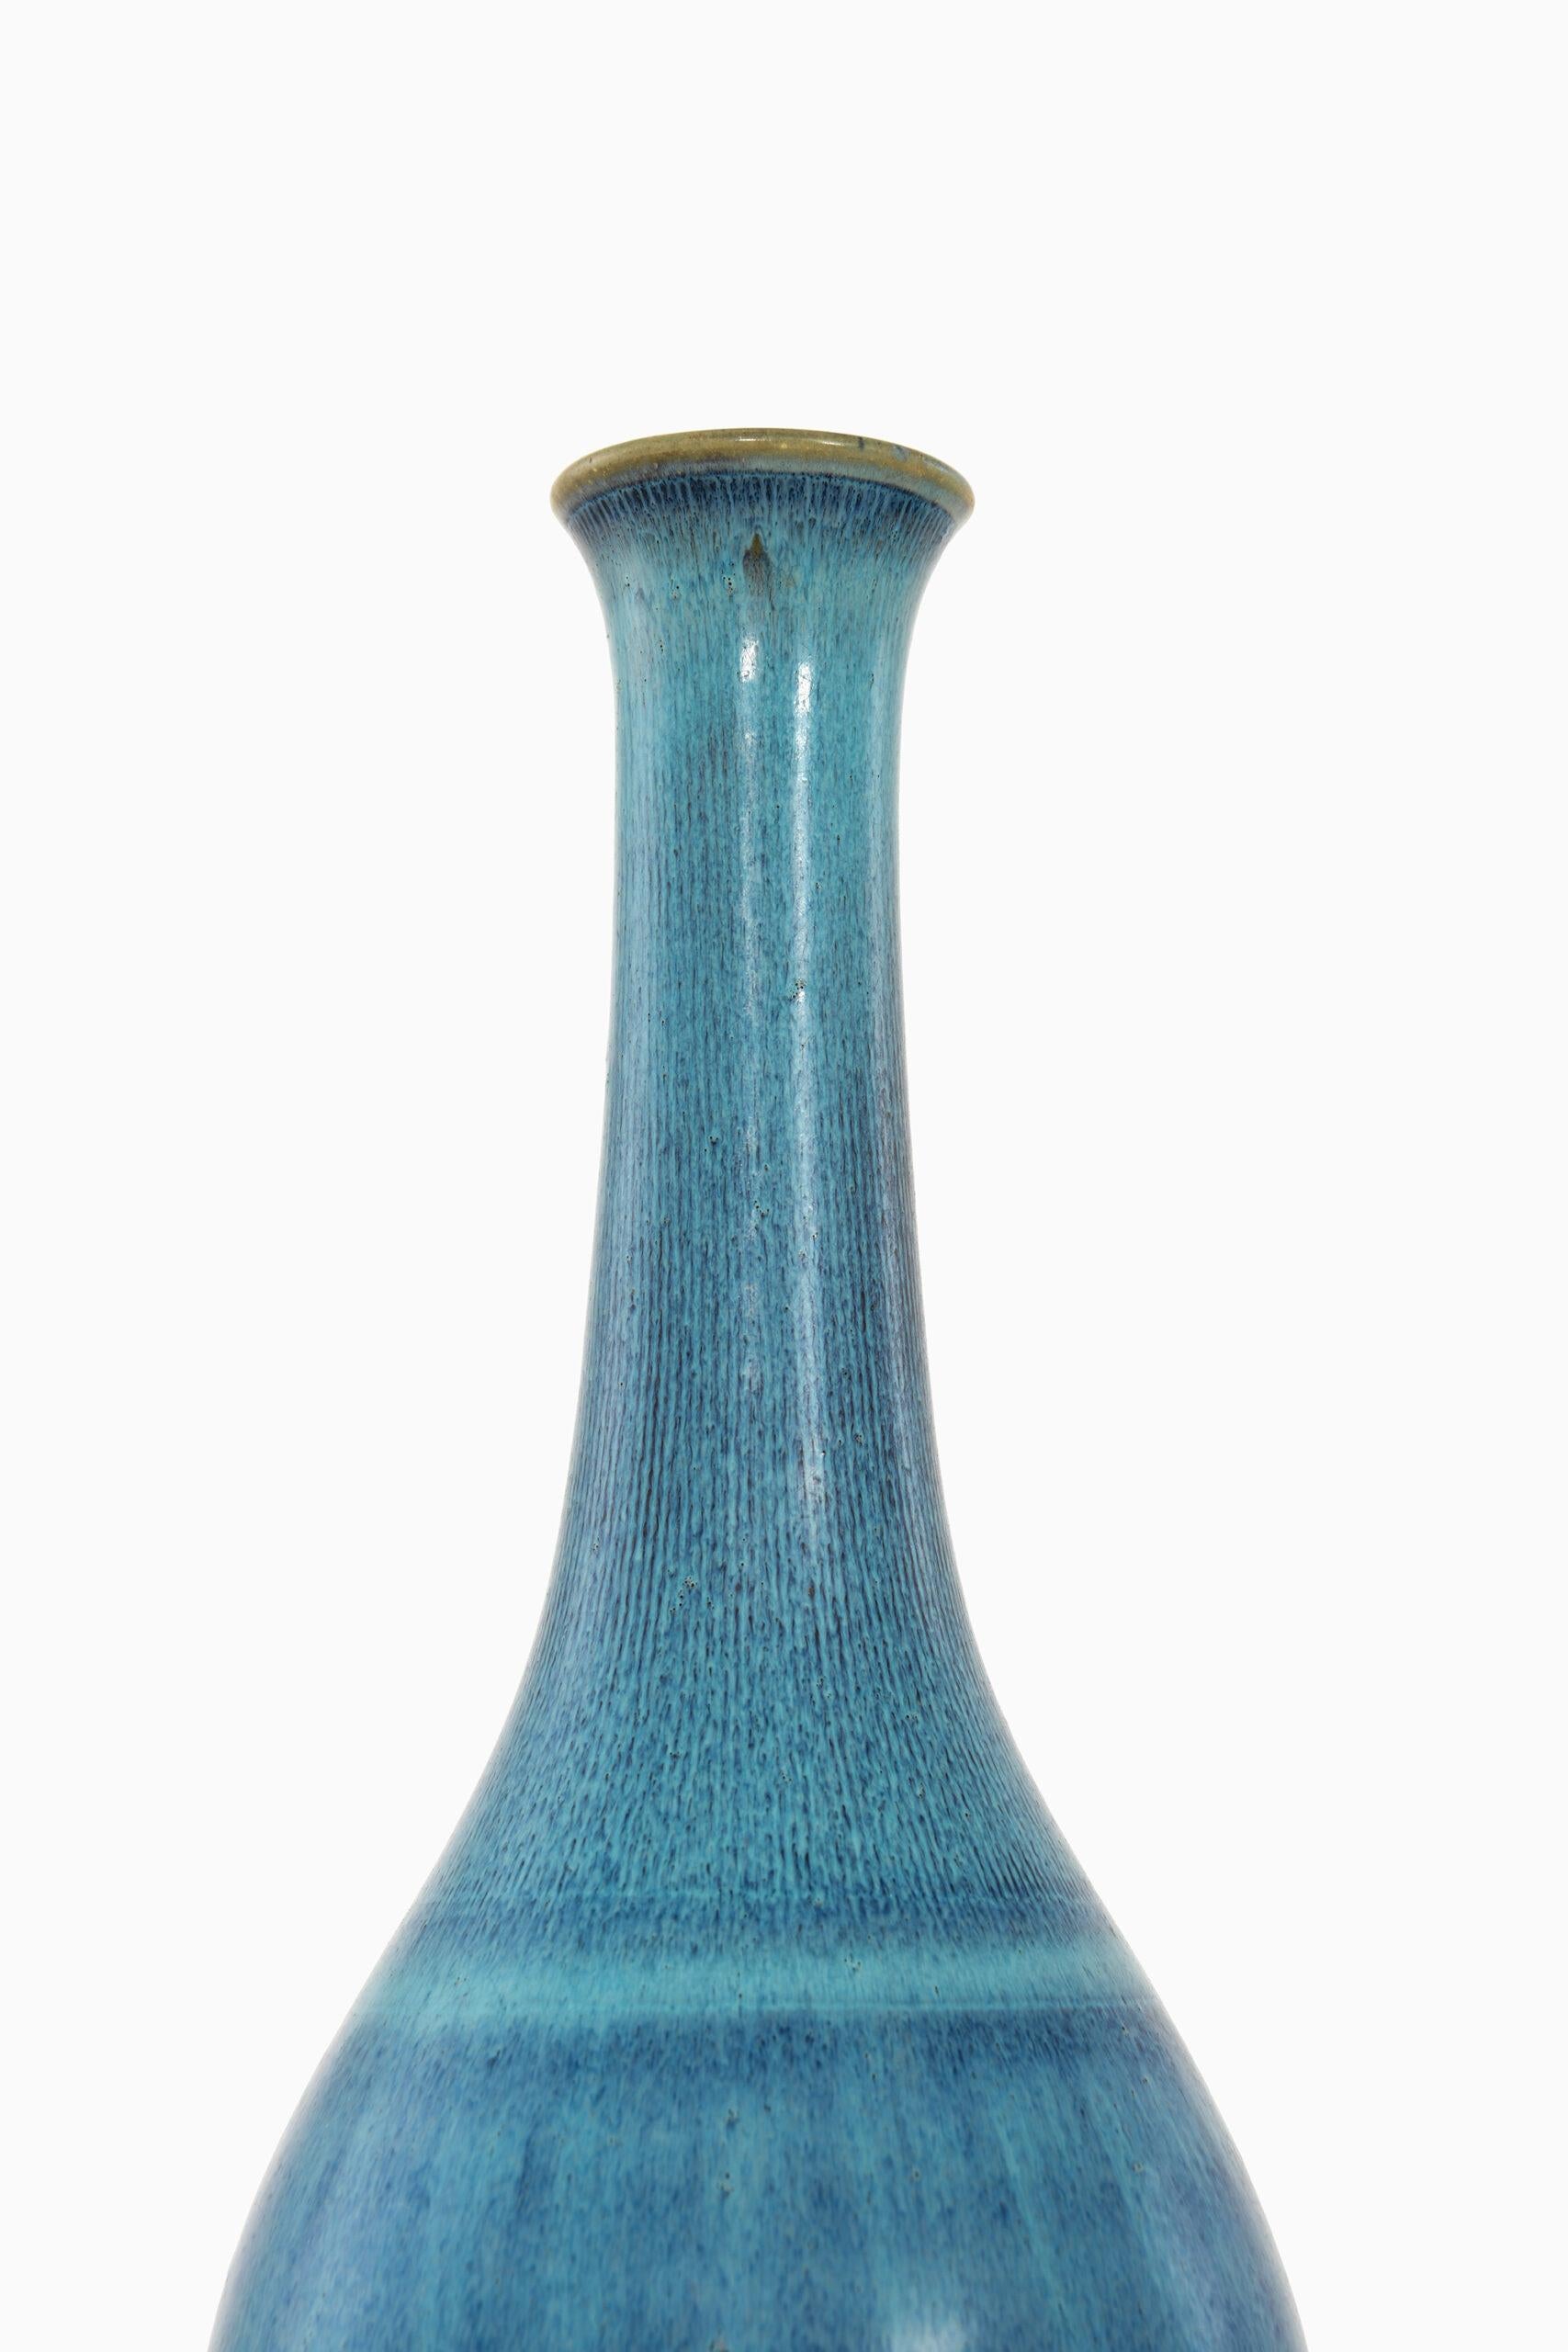 Scandinavian Modern Wilhelm Kåge Vase Model Farsta Produced by Gustavsberg For Sale